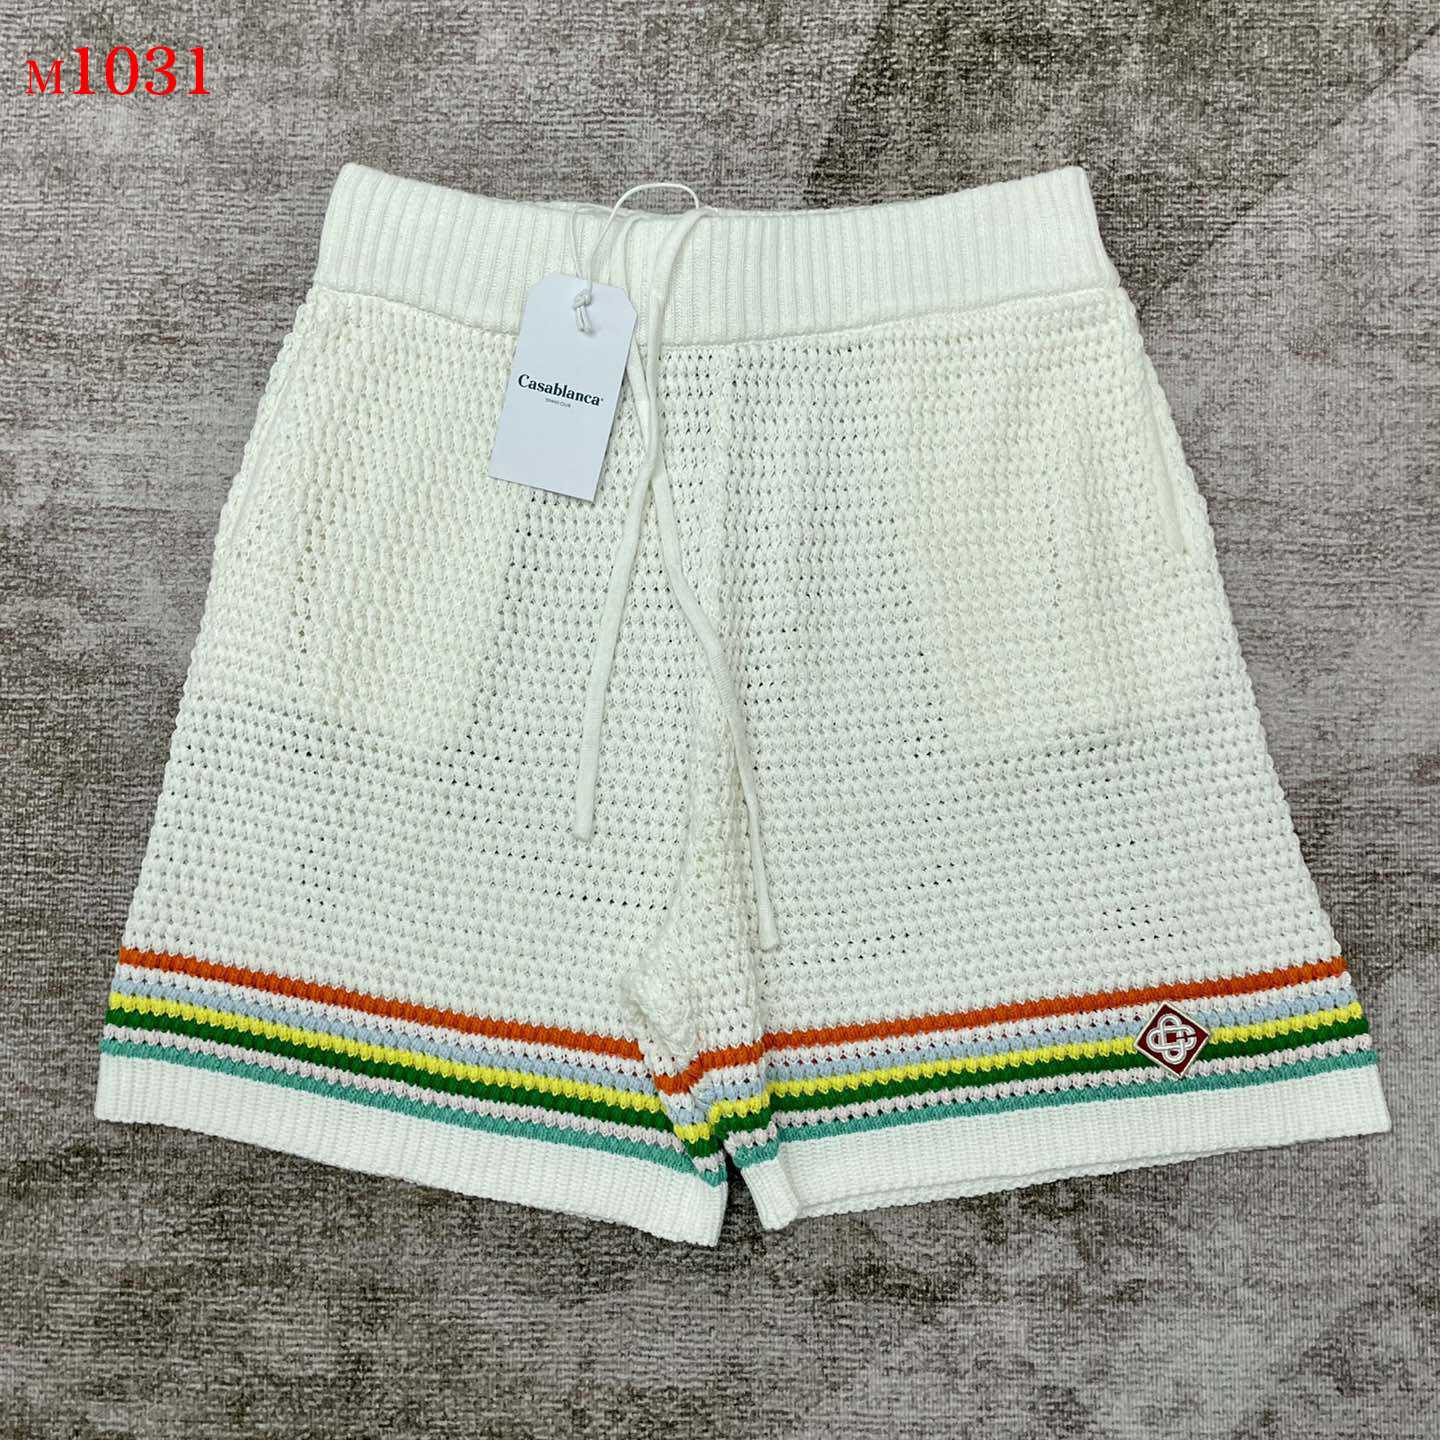 Casablanca Tennis crochet-knit Shorts    m1031 - PerfectKickZ